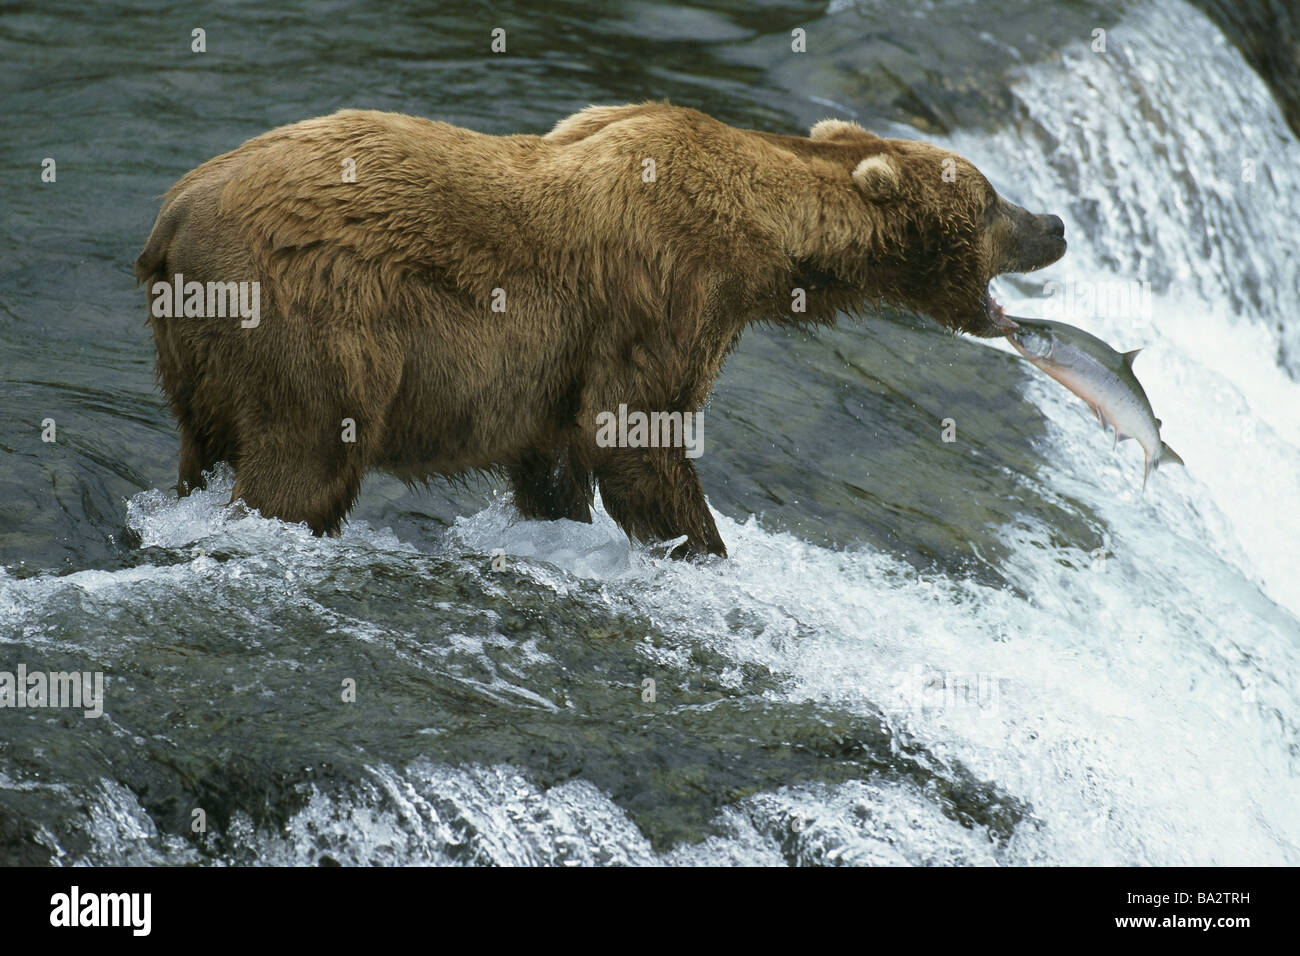 USA Alaska Katami national-park waterfall grizzly bear Ursus arctos horribilis salmon catches United States North America water Stock Photo